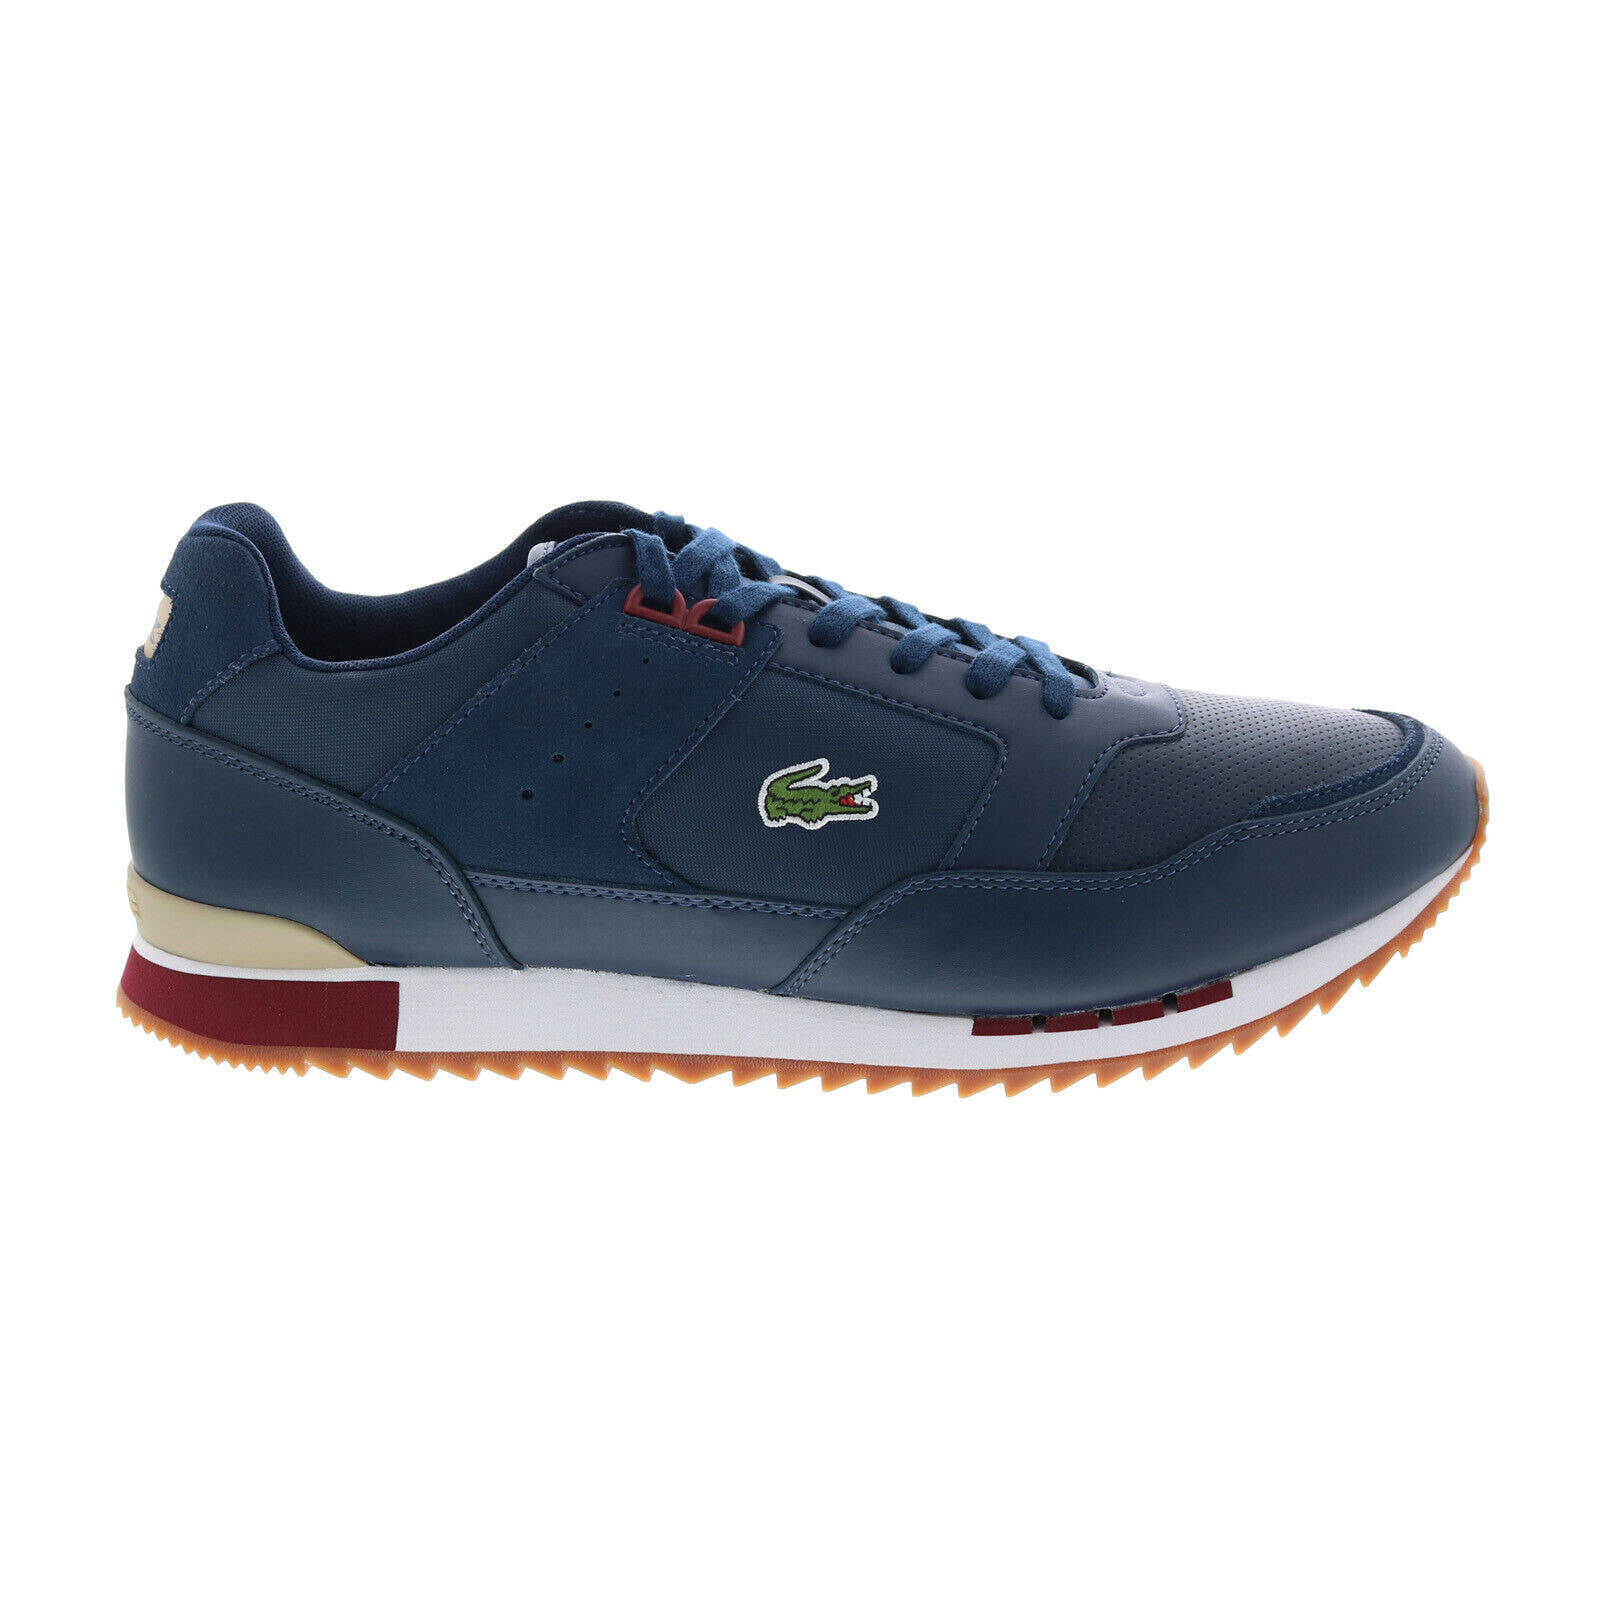 Lacoste Partner Piste 222 1 Mens Blue Leather Lifestyle Sneakers Shoes 11.5